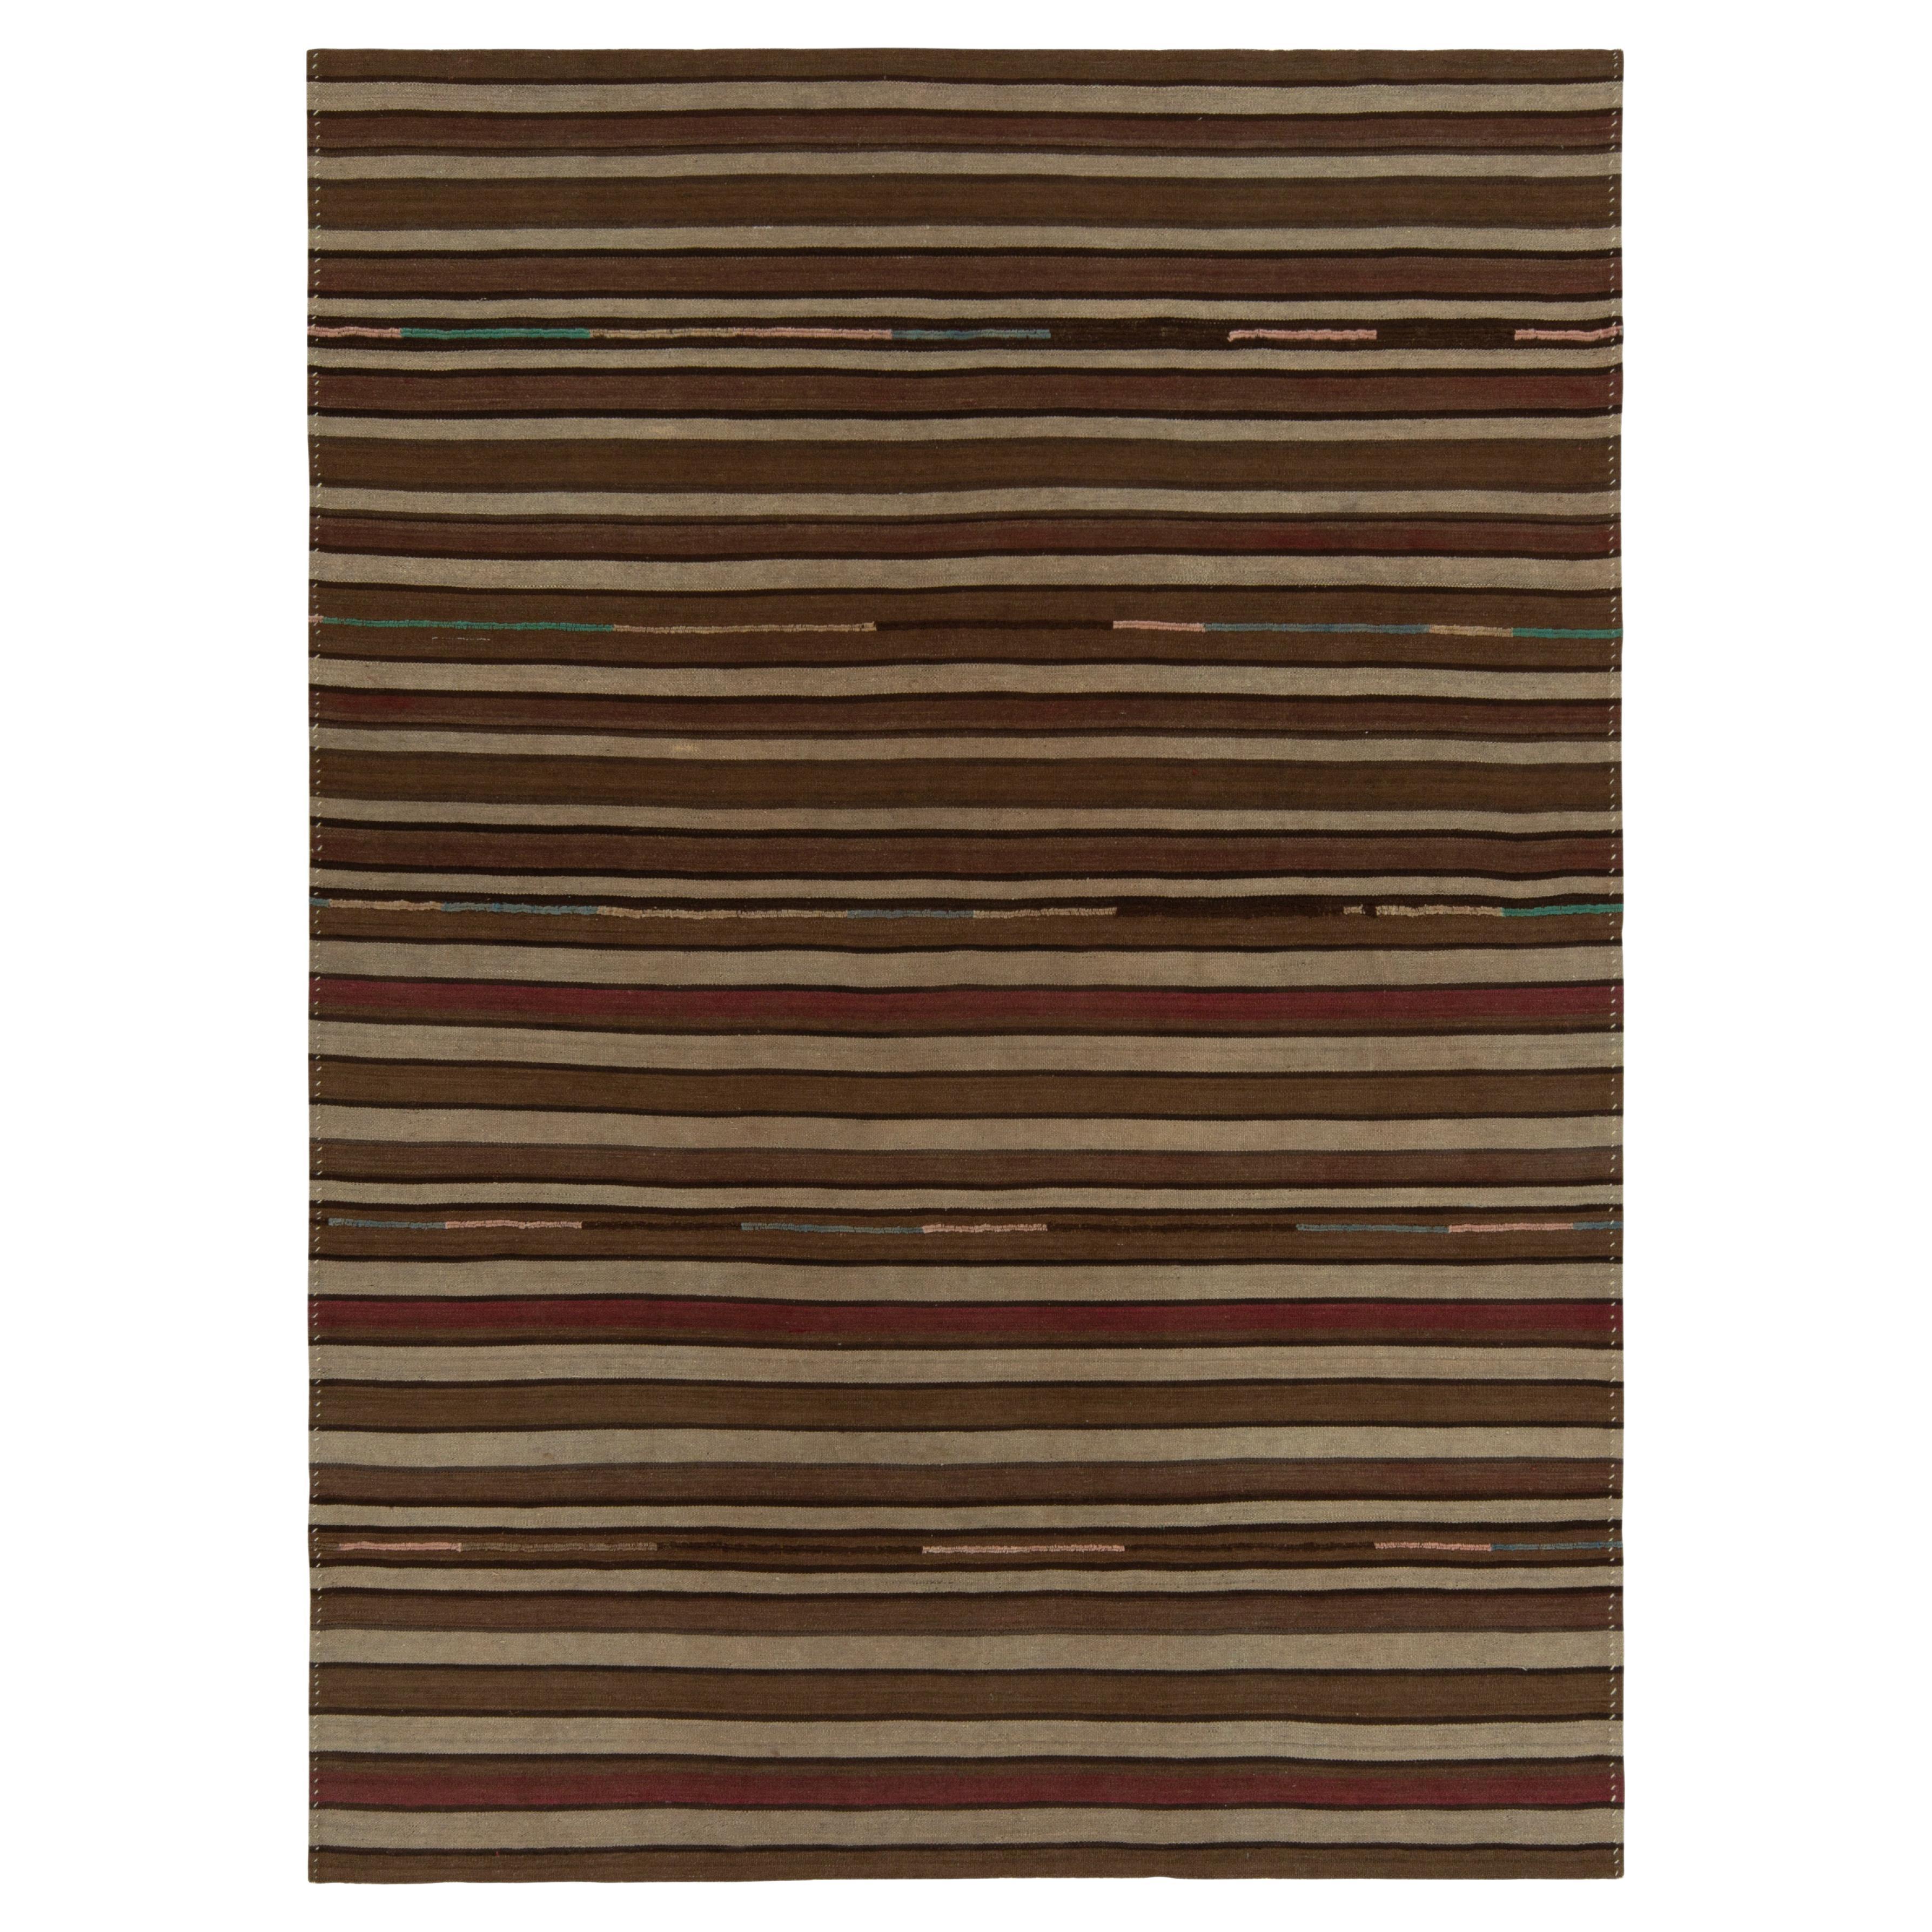 1930s Antique Kilim Rug in Beige-Brown & Red Stripe Patterns by Rug & Kilim For Sale